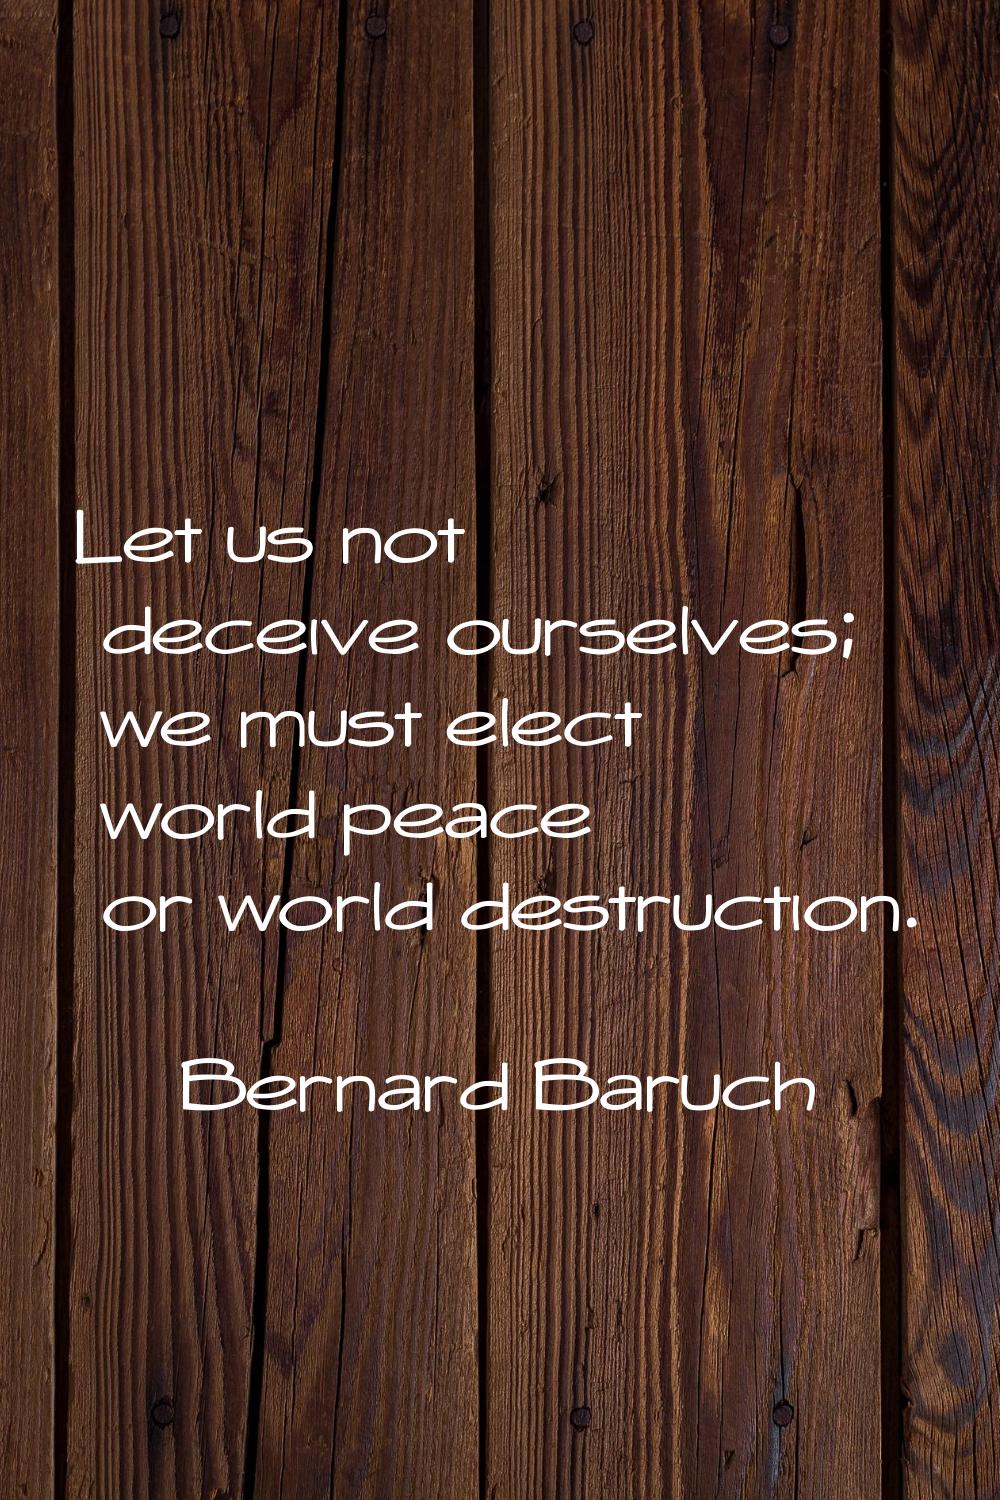 Let us not deceive ourselves; we must elect world peace or world destruction.